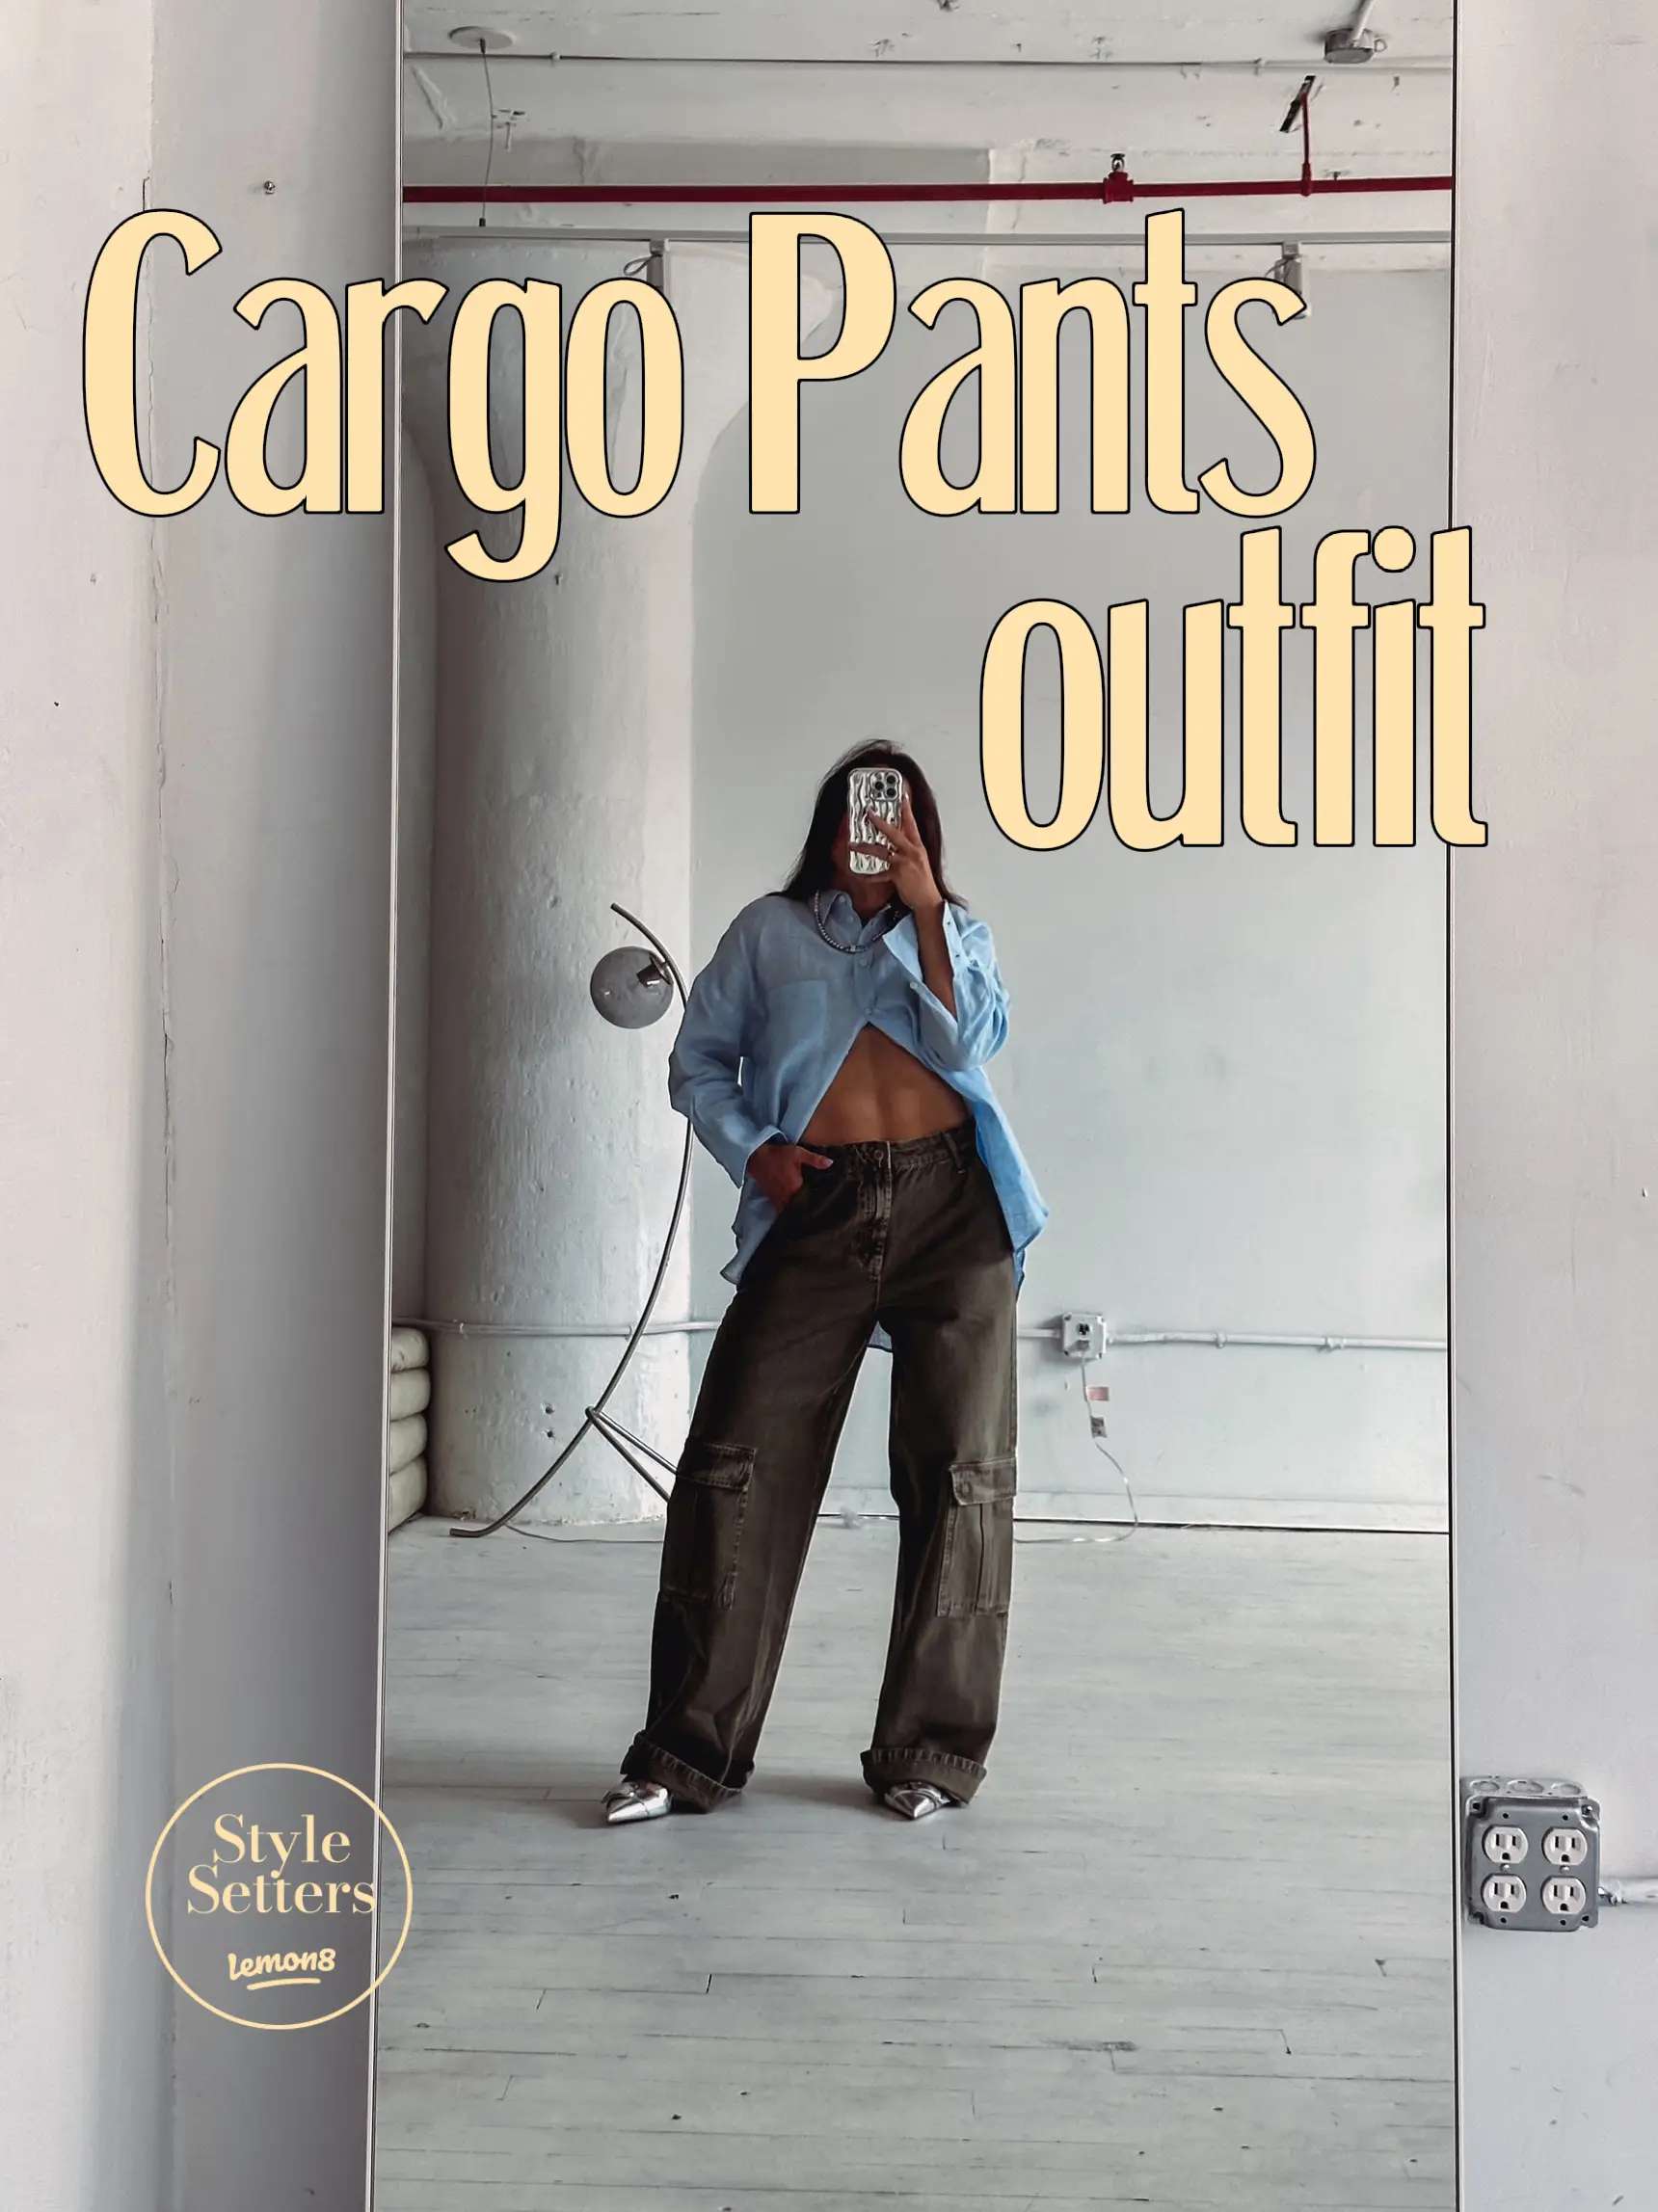 Zara Cargo Jeans - Lemon8 Search